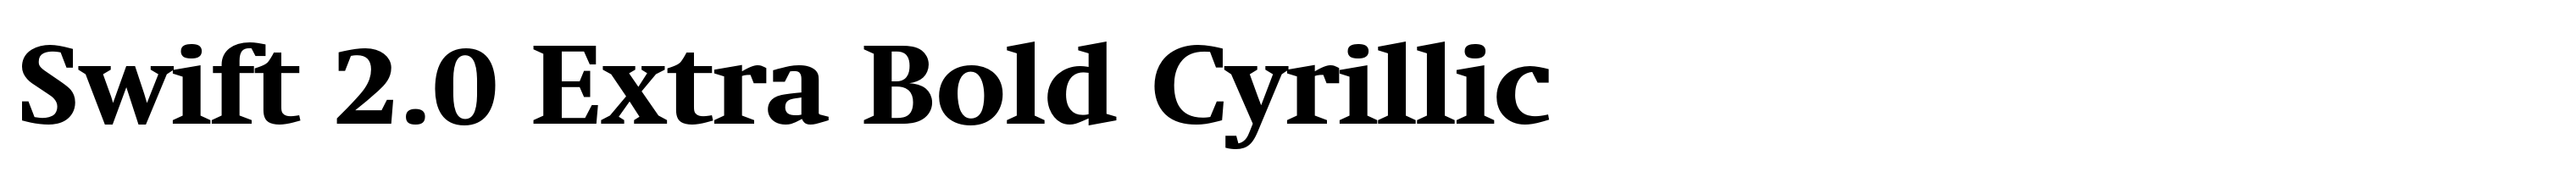 Swift 2.0 Extra Bold Cyrillic